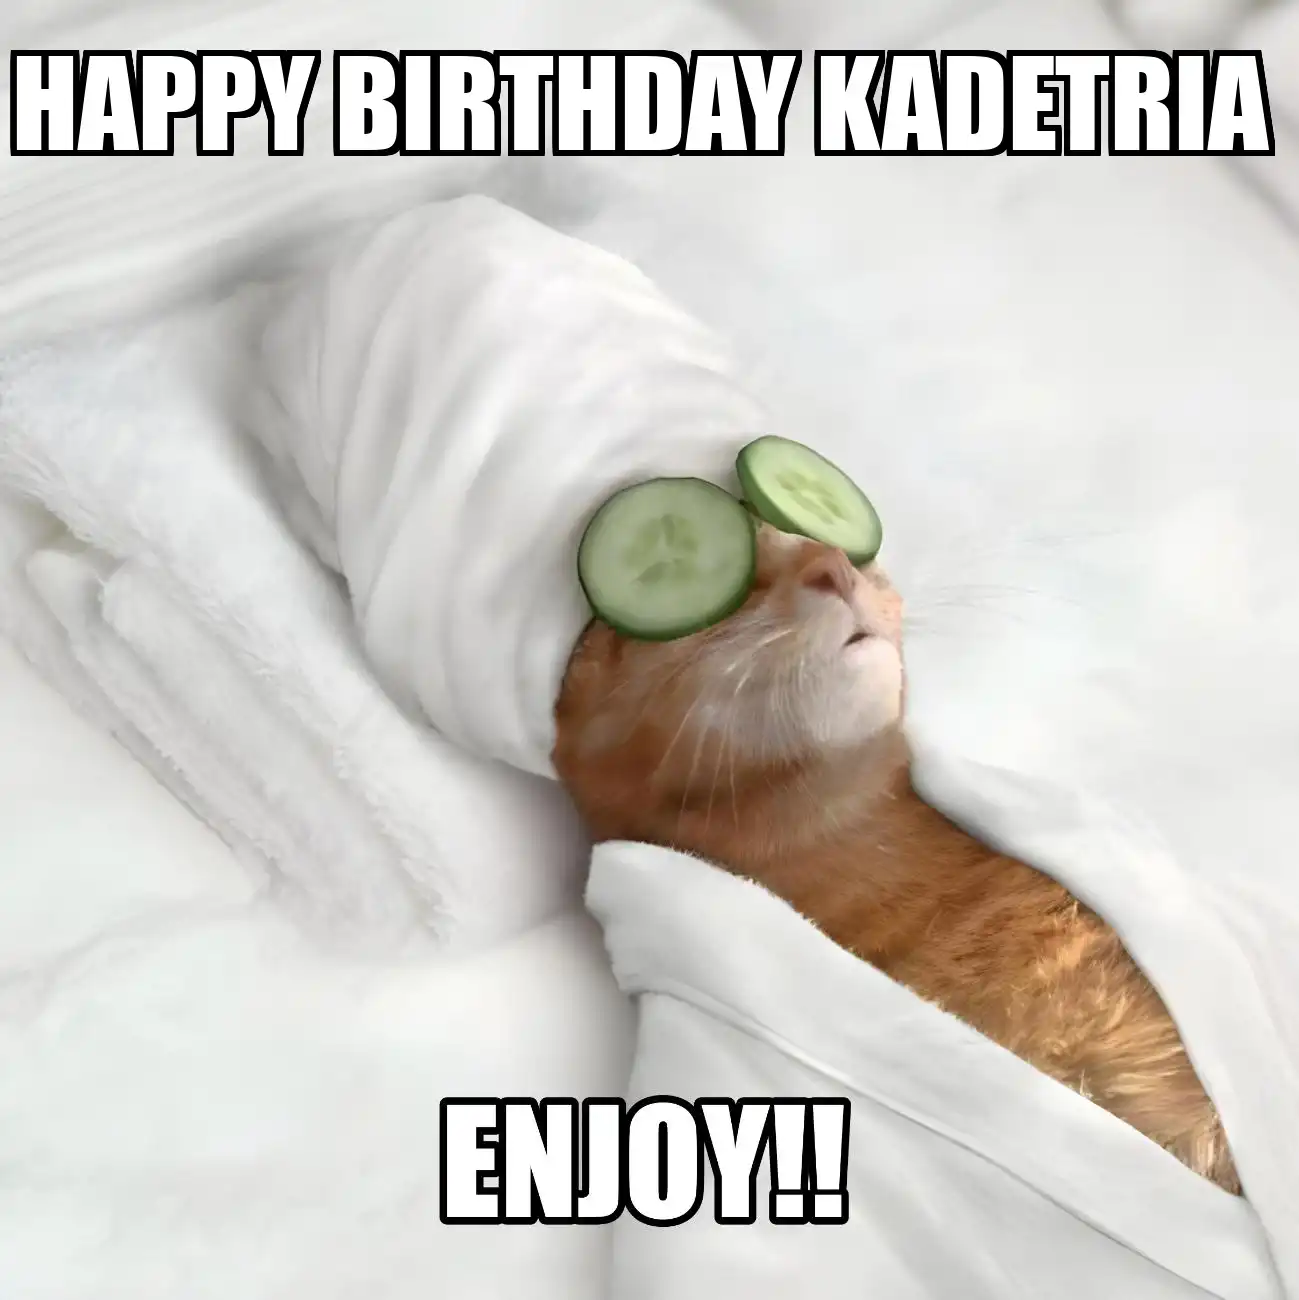 Happy Birthday Kadetria Enjoy Cat Meme